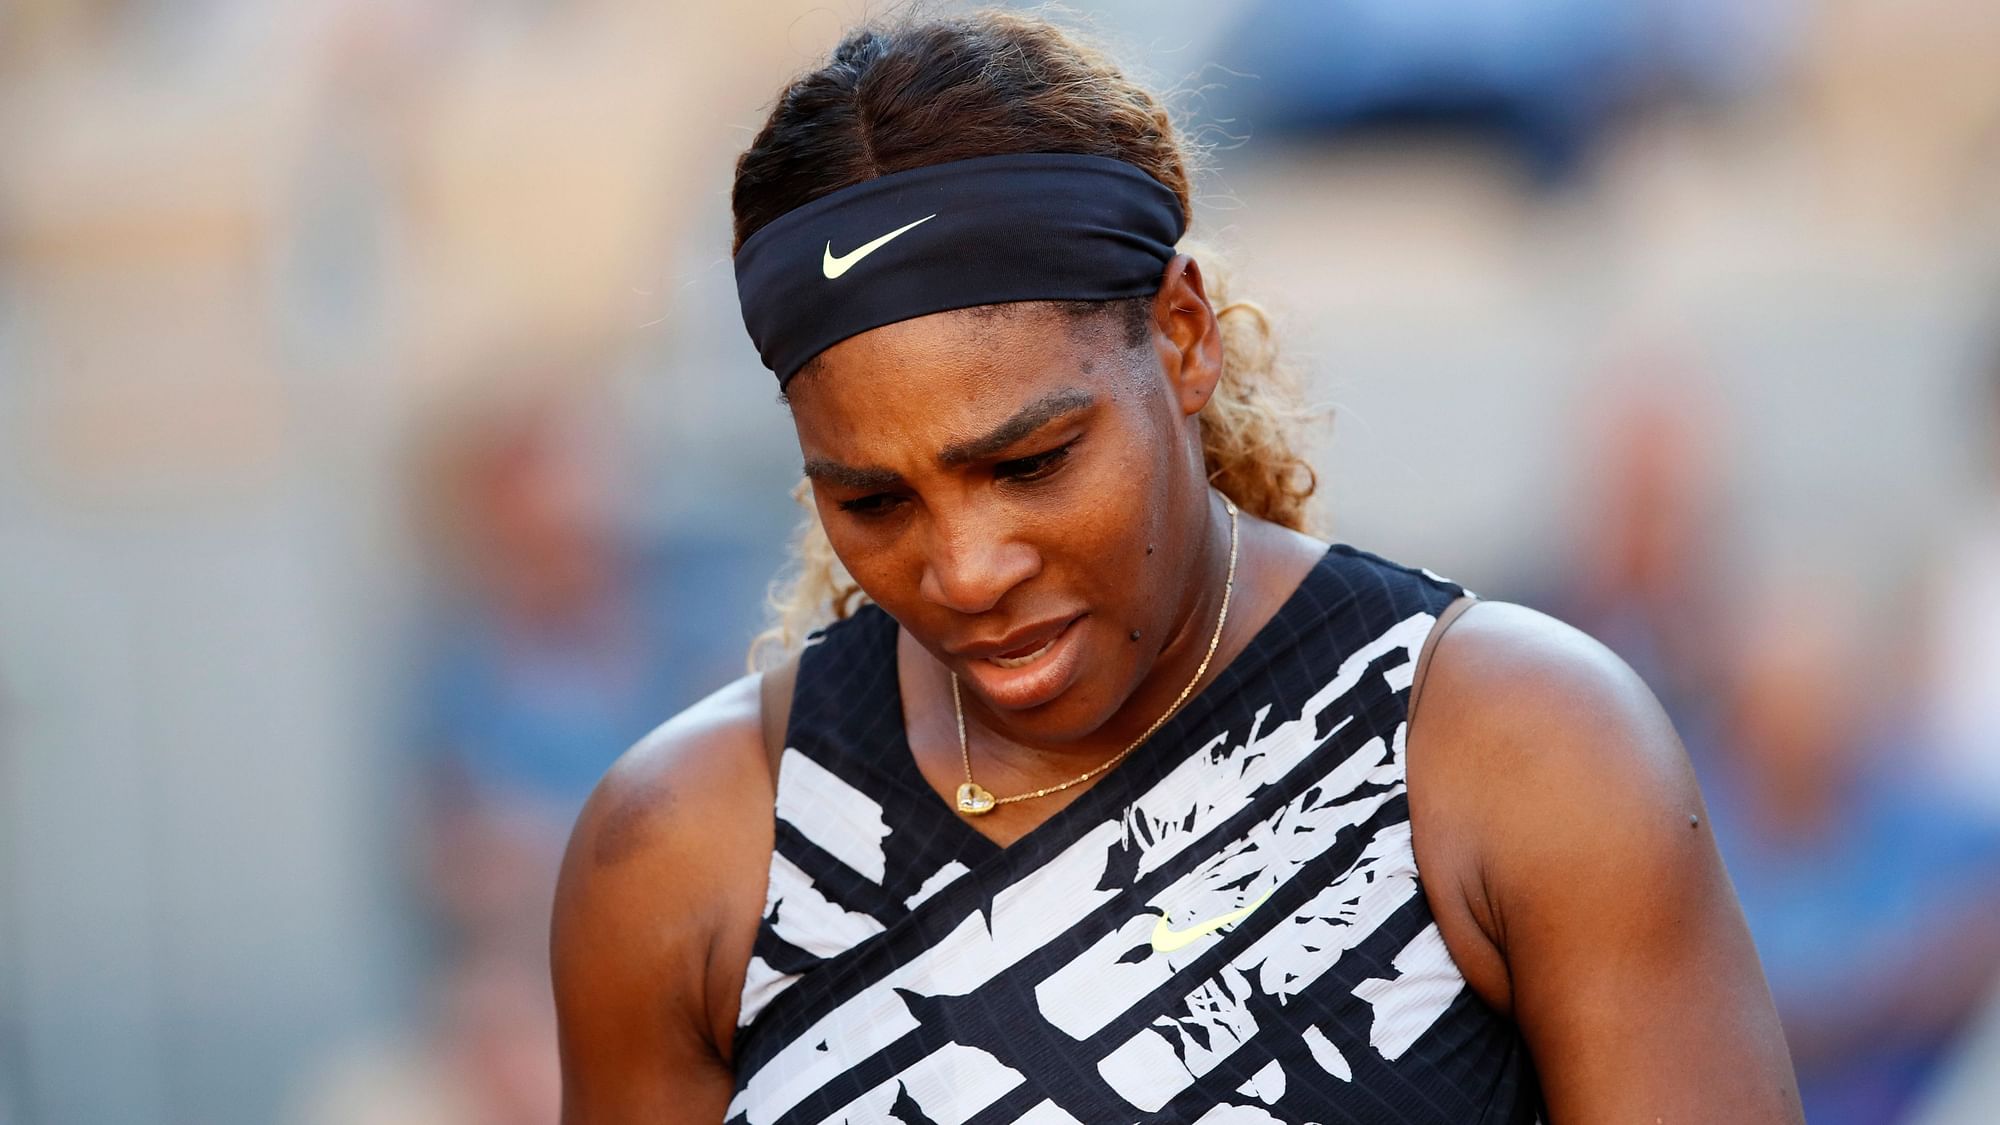 Serena Williams was beaten 6-2, 7-5 in the third round at Roland Garros by 20-year-old American Sofia Kenin.